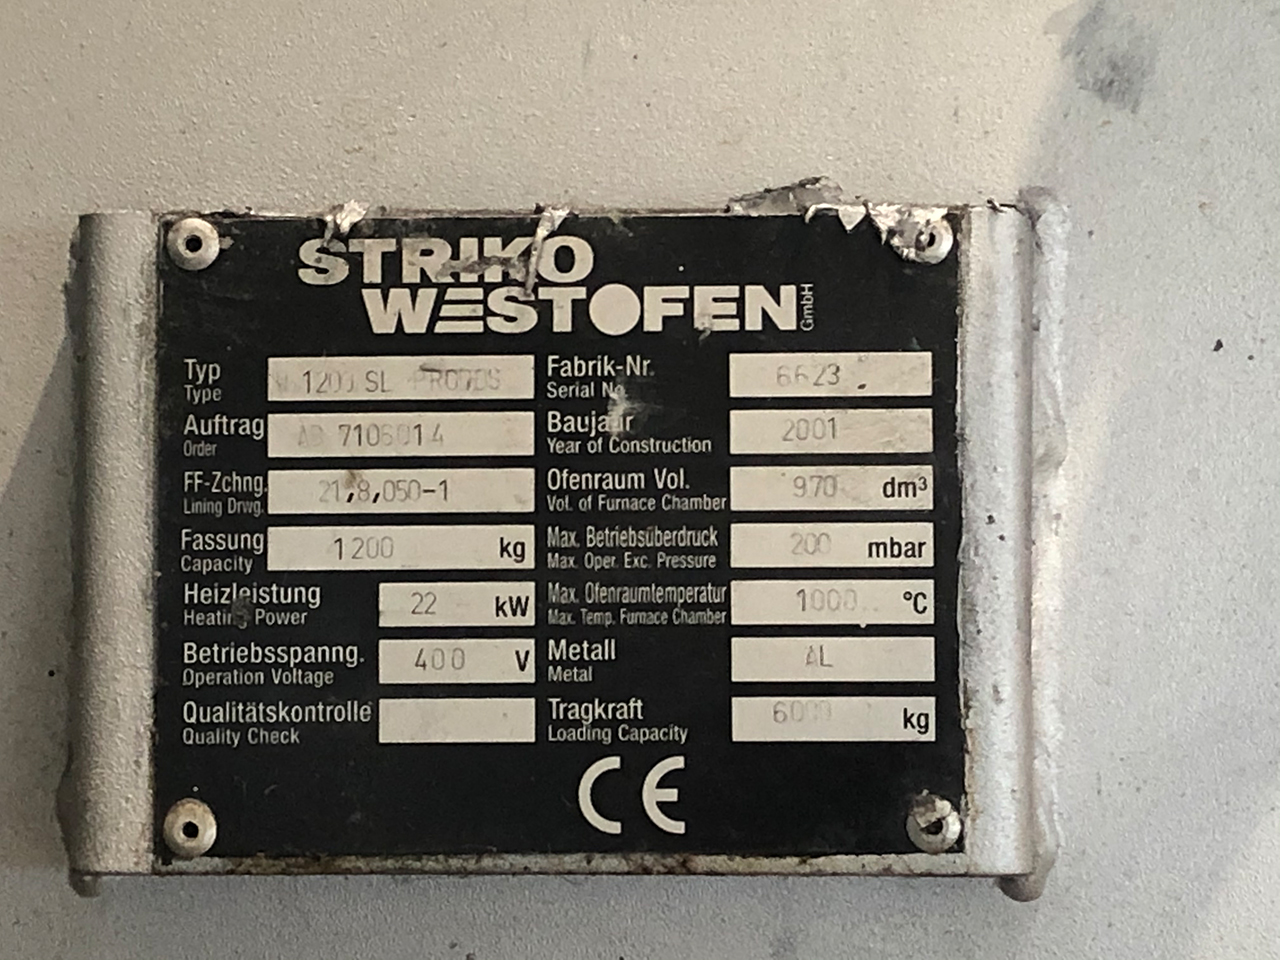 StrikoWestofen W 1200 SL ProDos DPC Dosing Furnace O1814, used